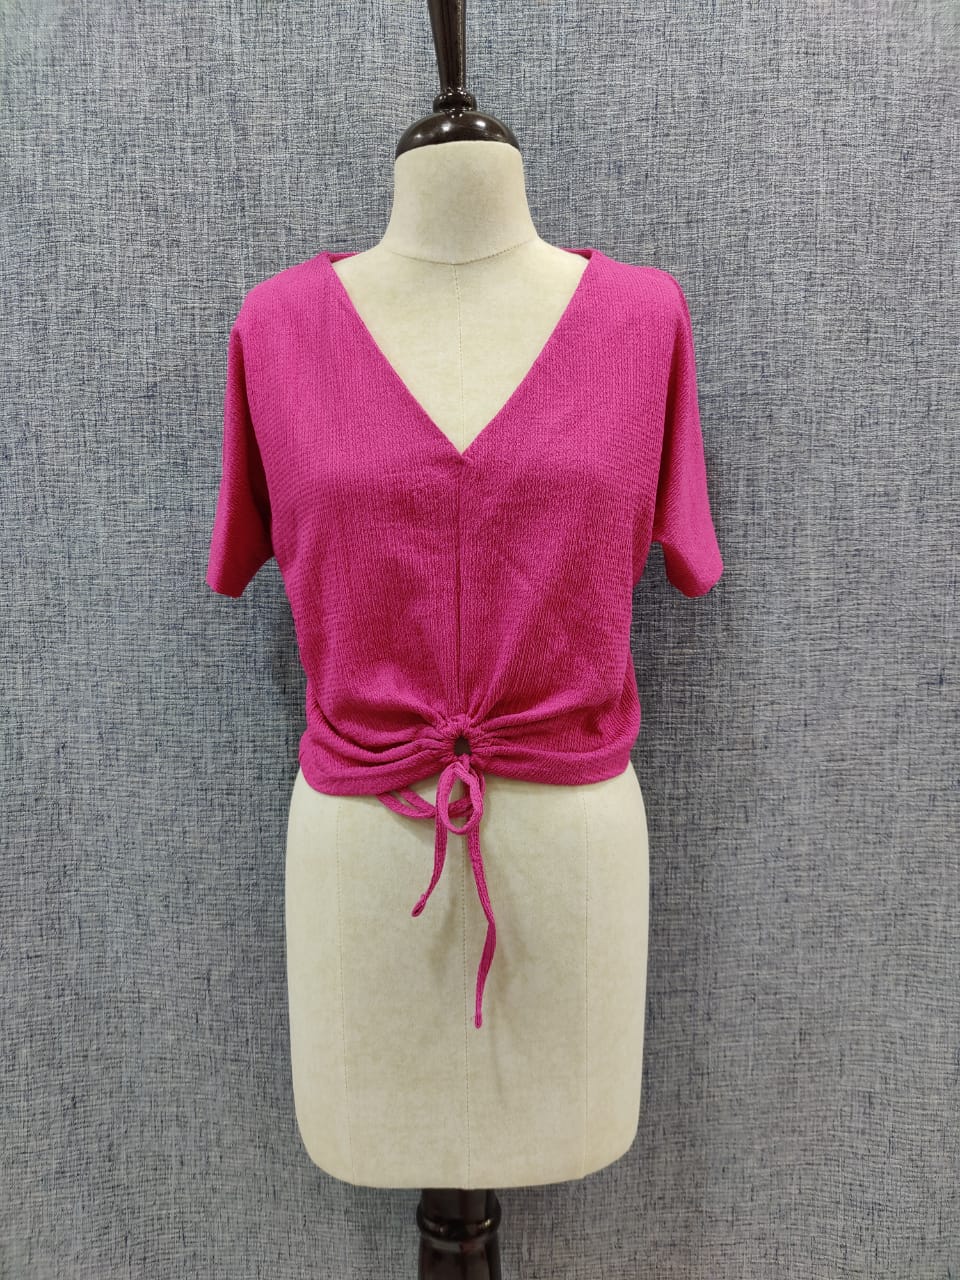 ZARA Hot Pink Knit Top | Relove